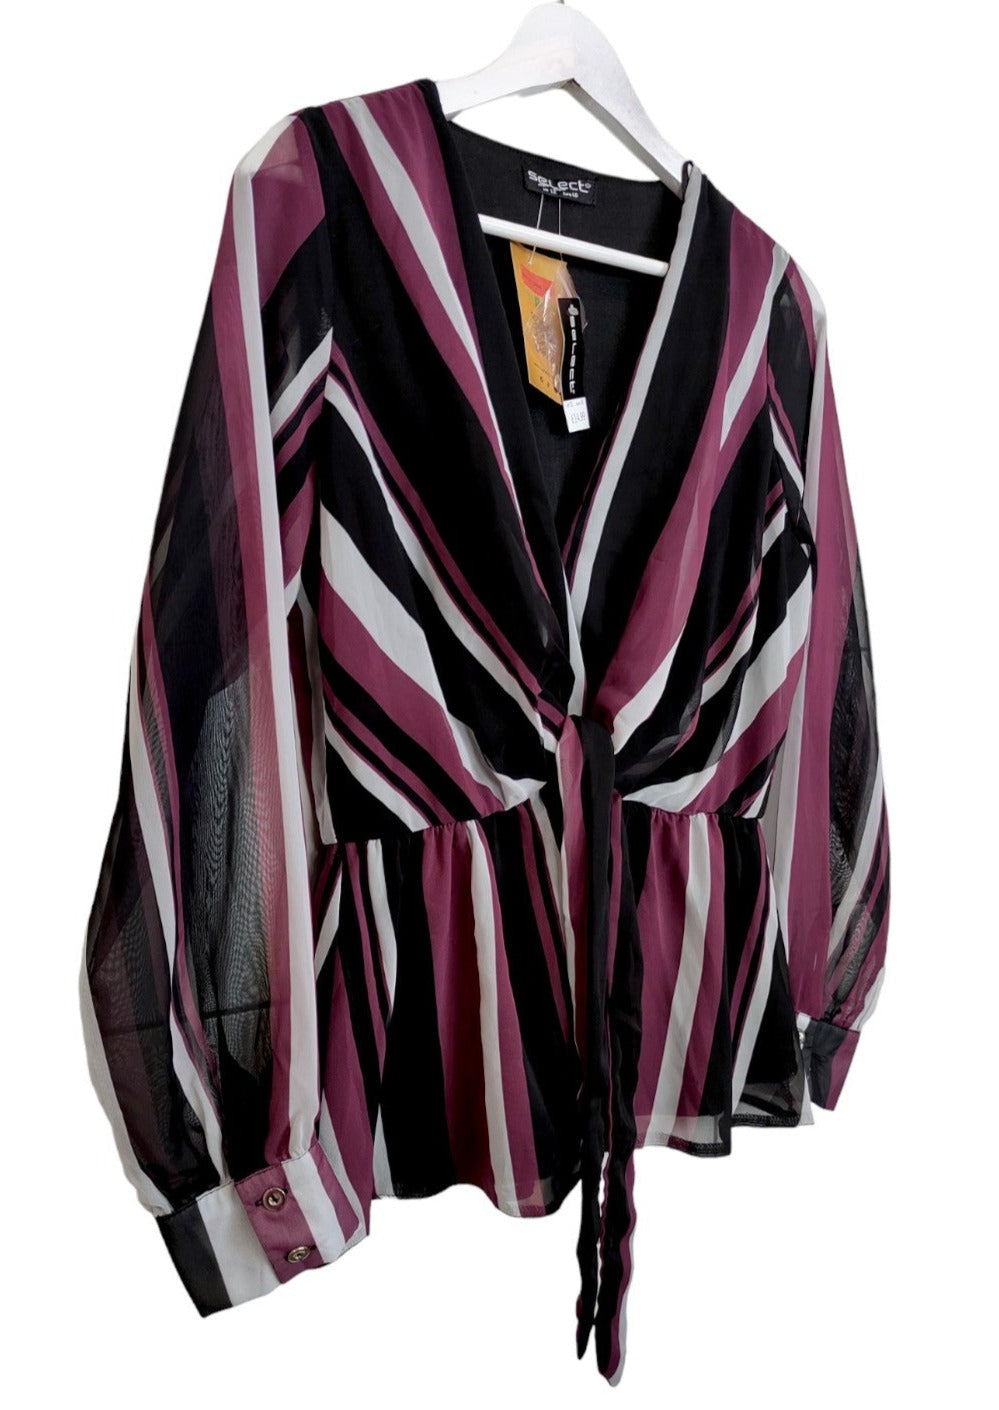 Stock, Ριγέ Μακρυμάνικη Γυναικεία Μπλούζα σε Μαύρο - Μπορντώ χρώμα (Medium)